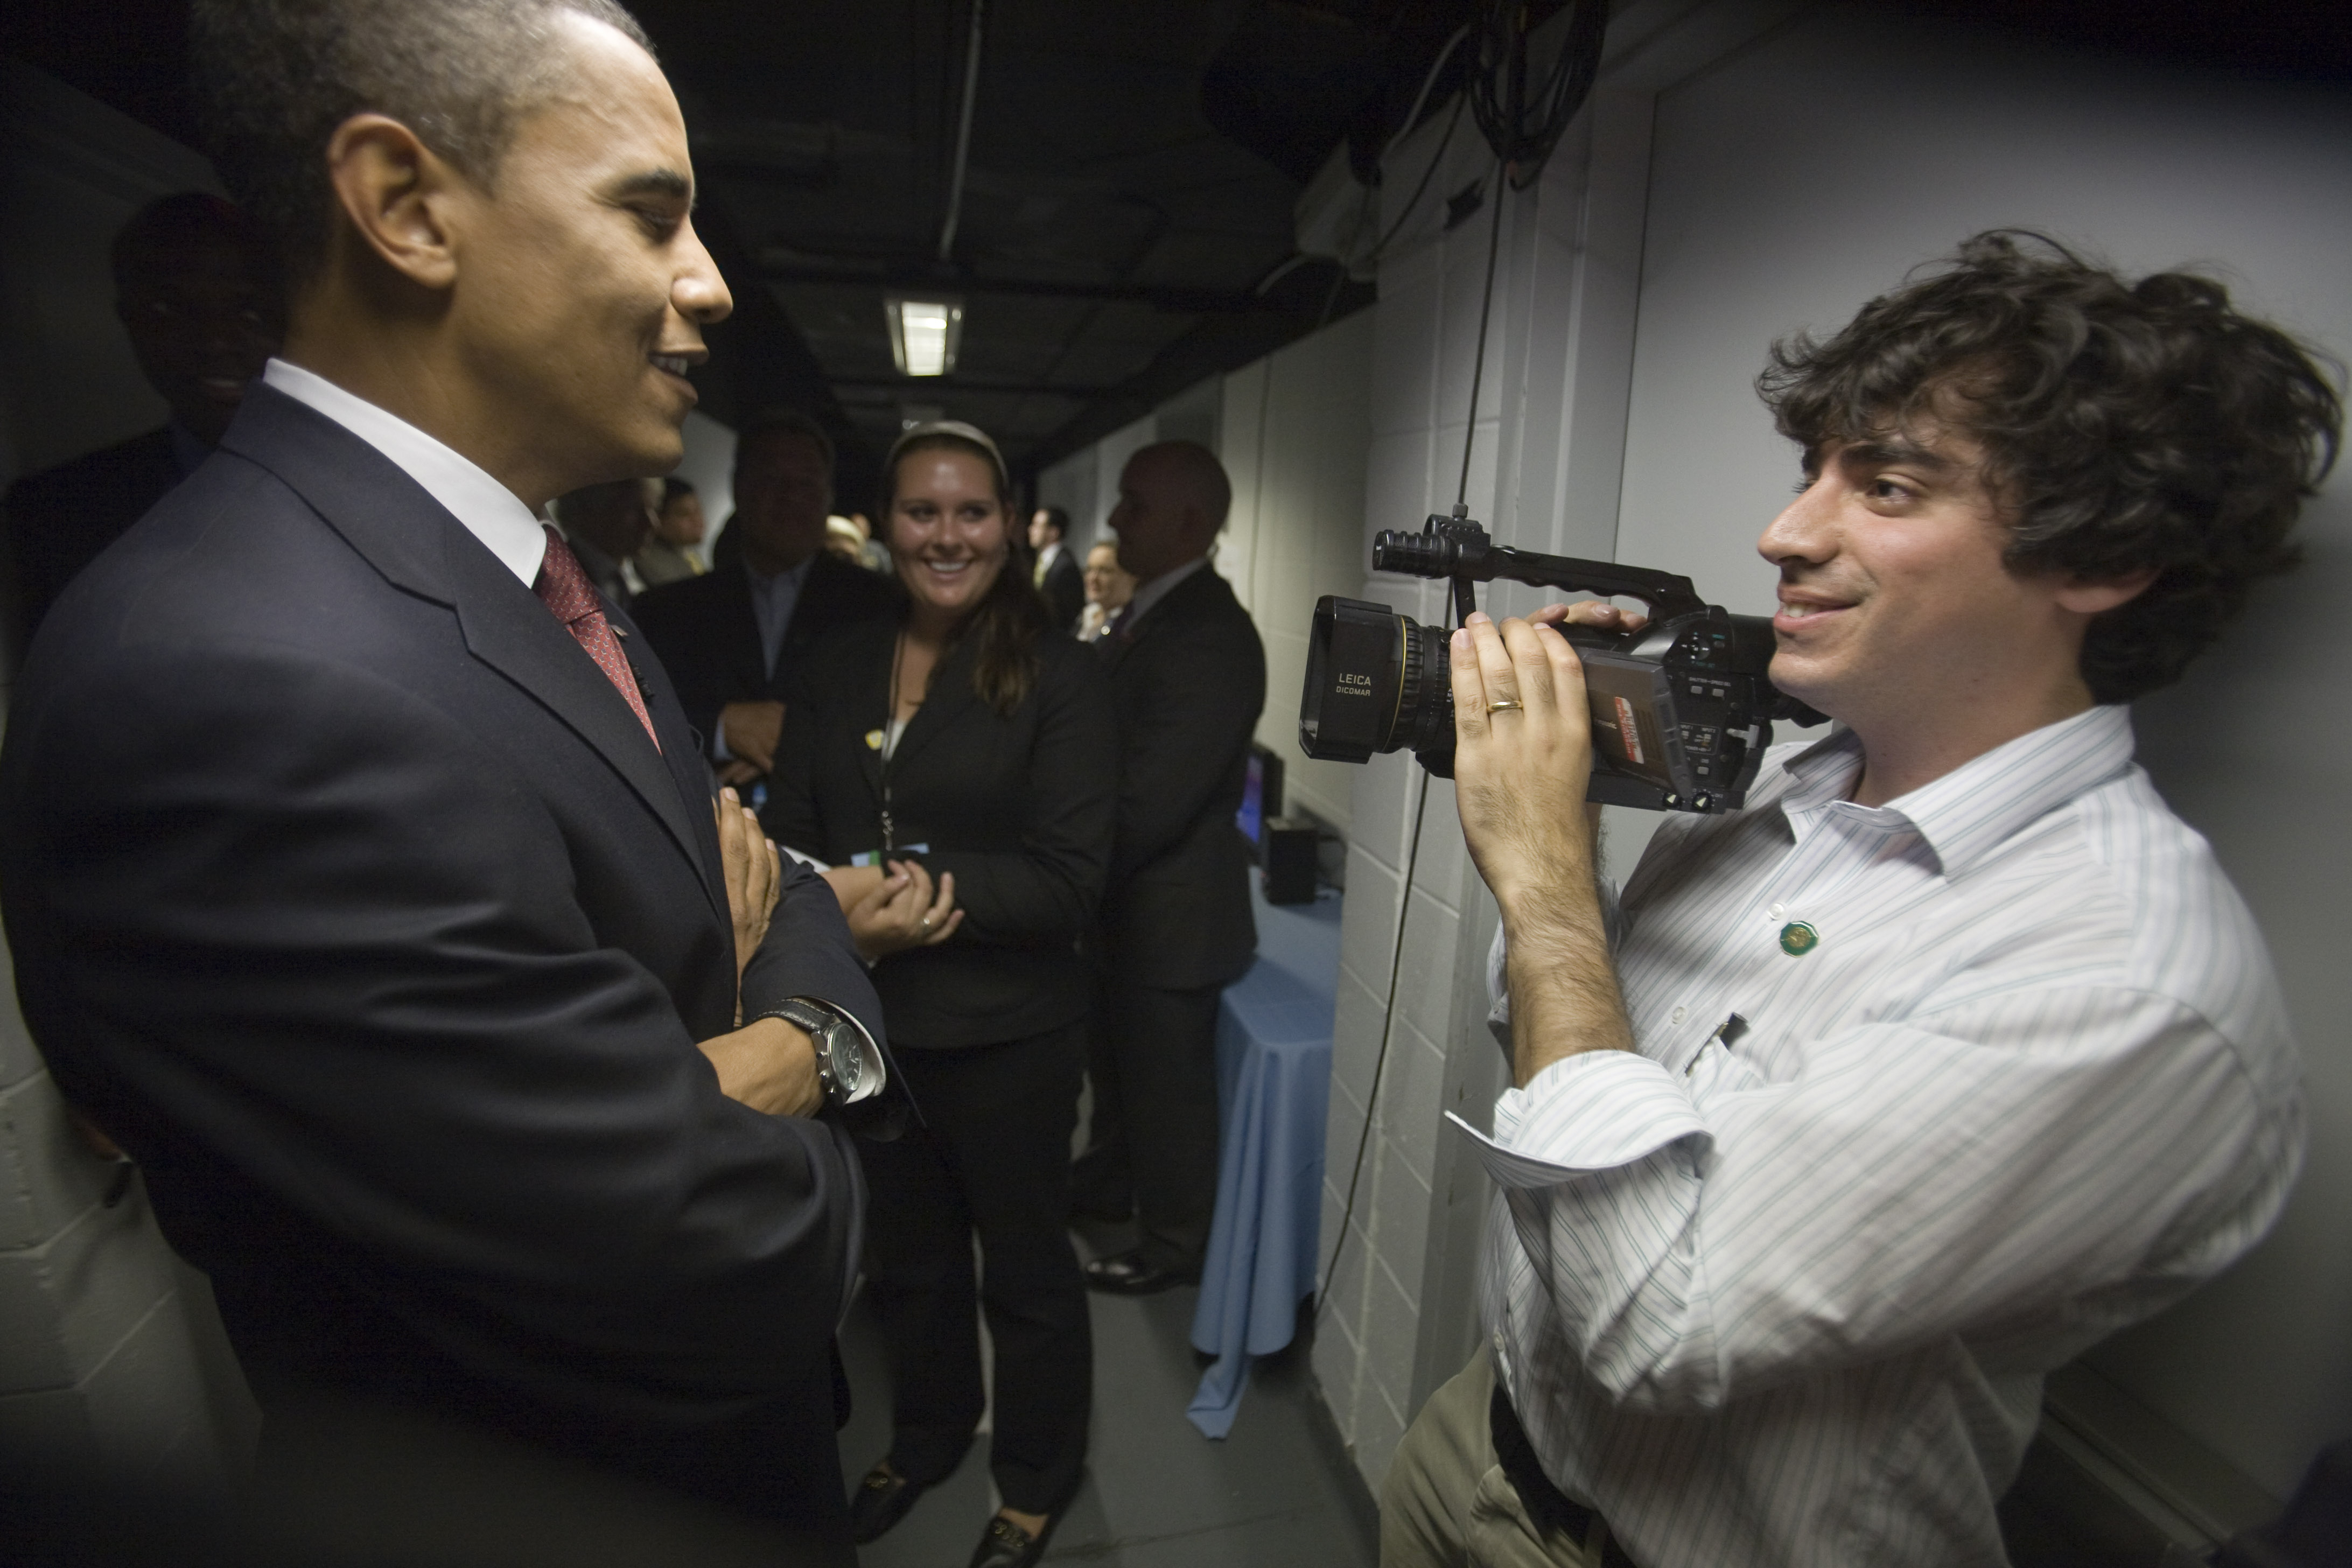 Arun Chaudhary videotapes President Obama